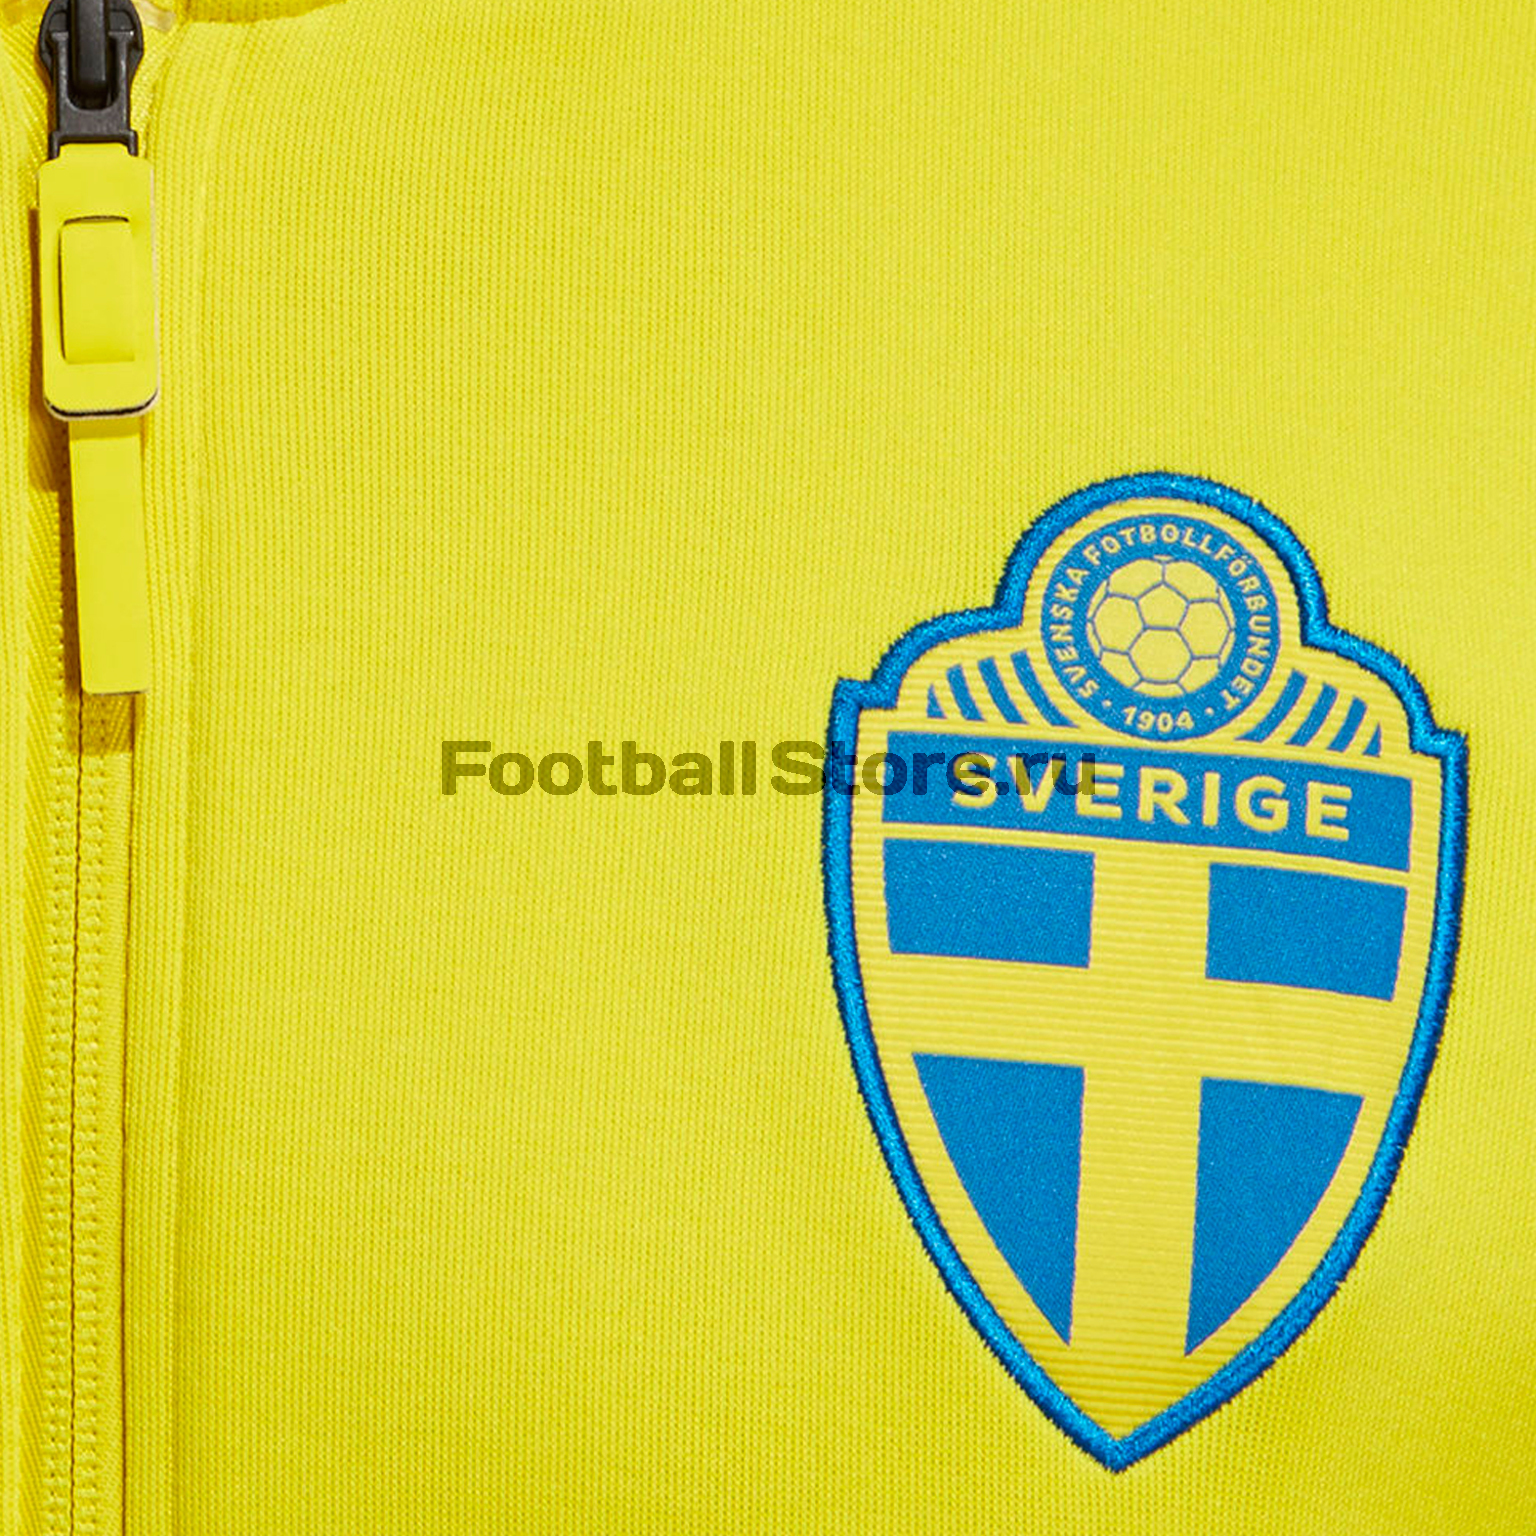 Олимпийка Adidas сборной Швеции CF1666 